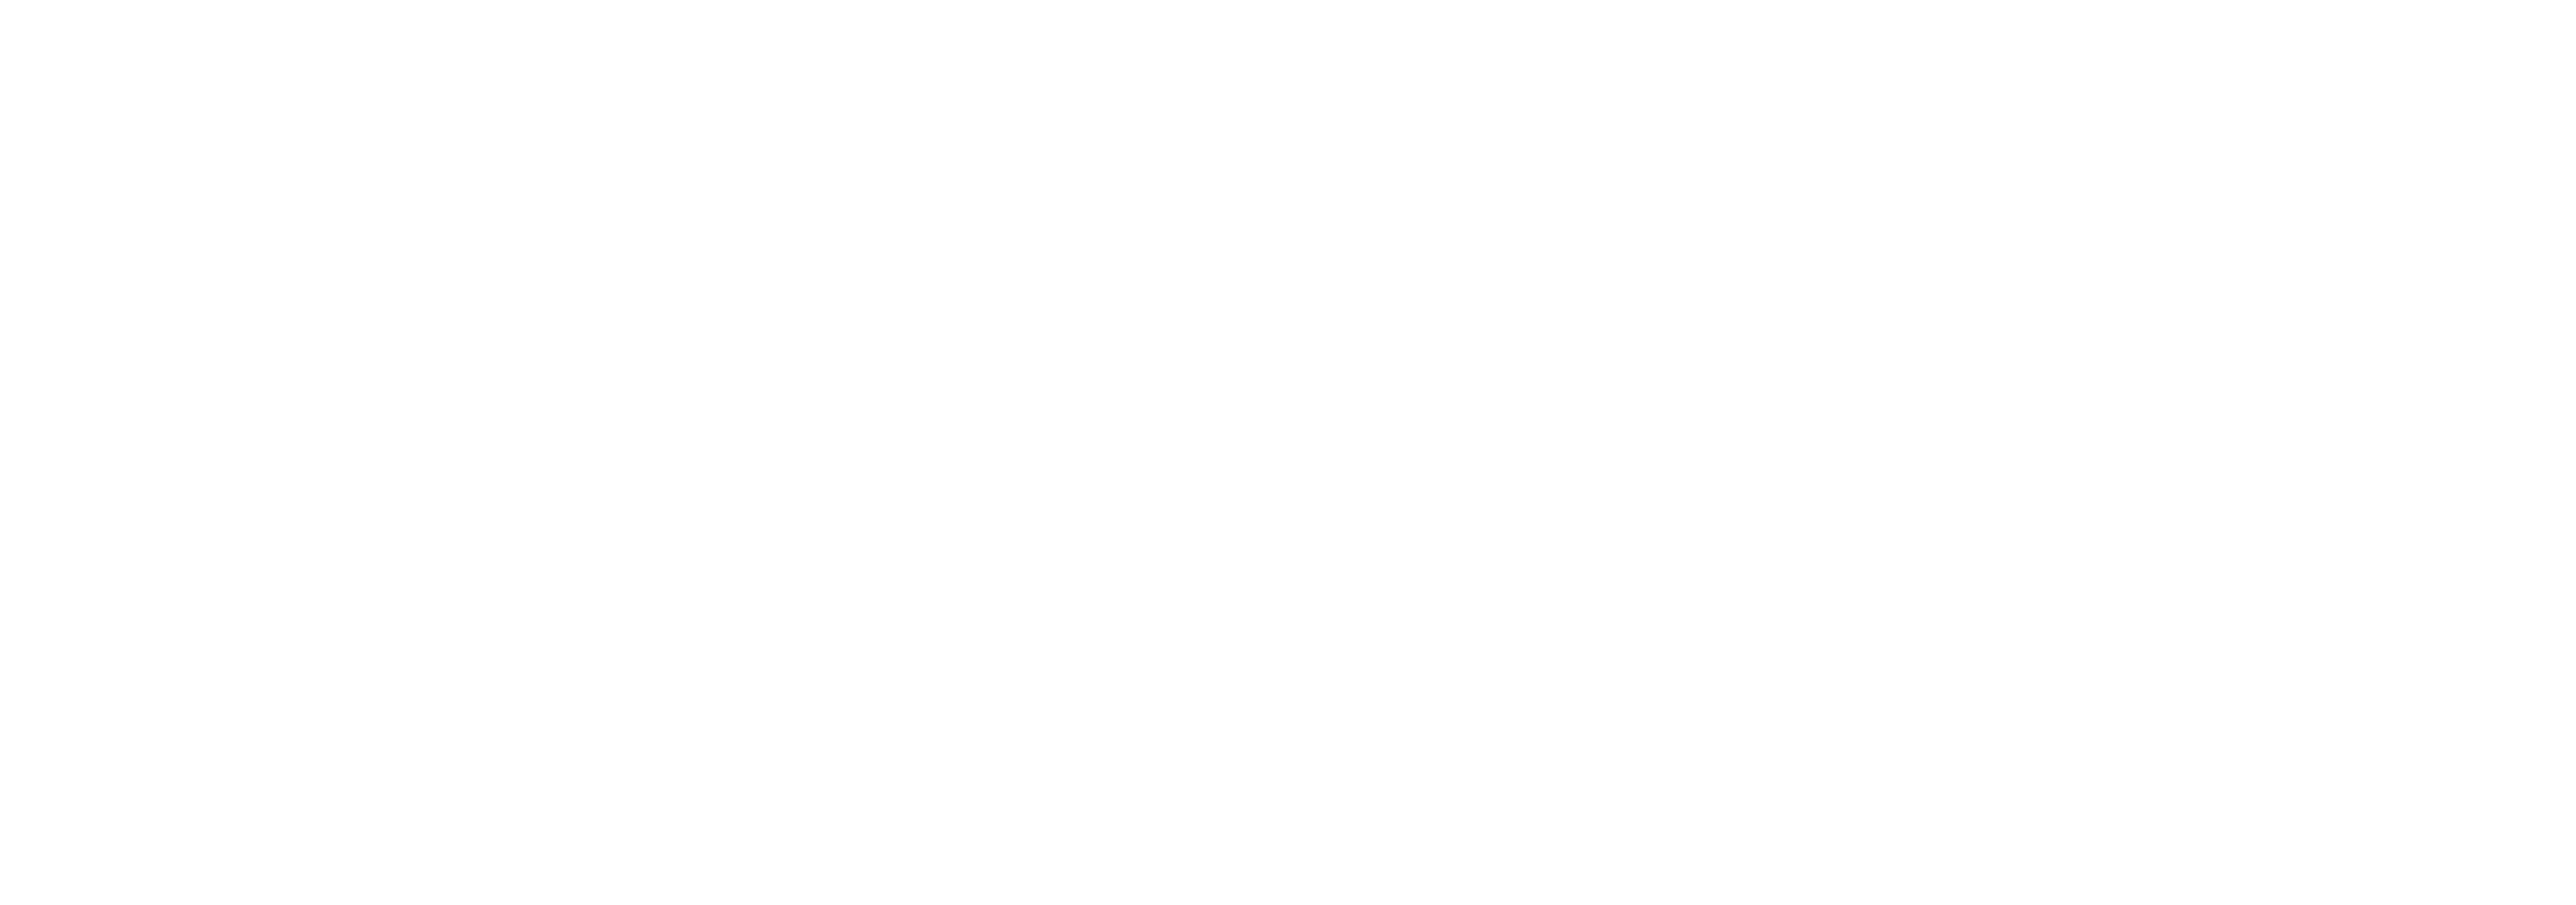 run-better-project_single_white